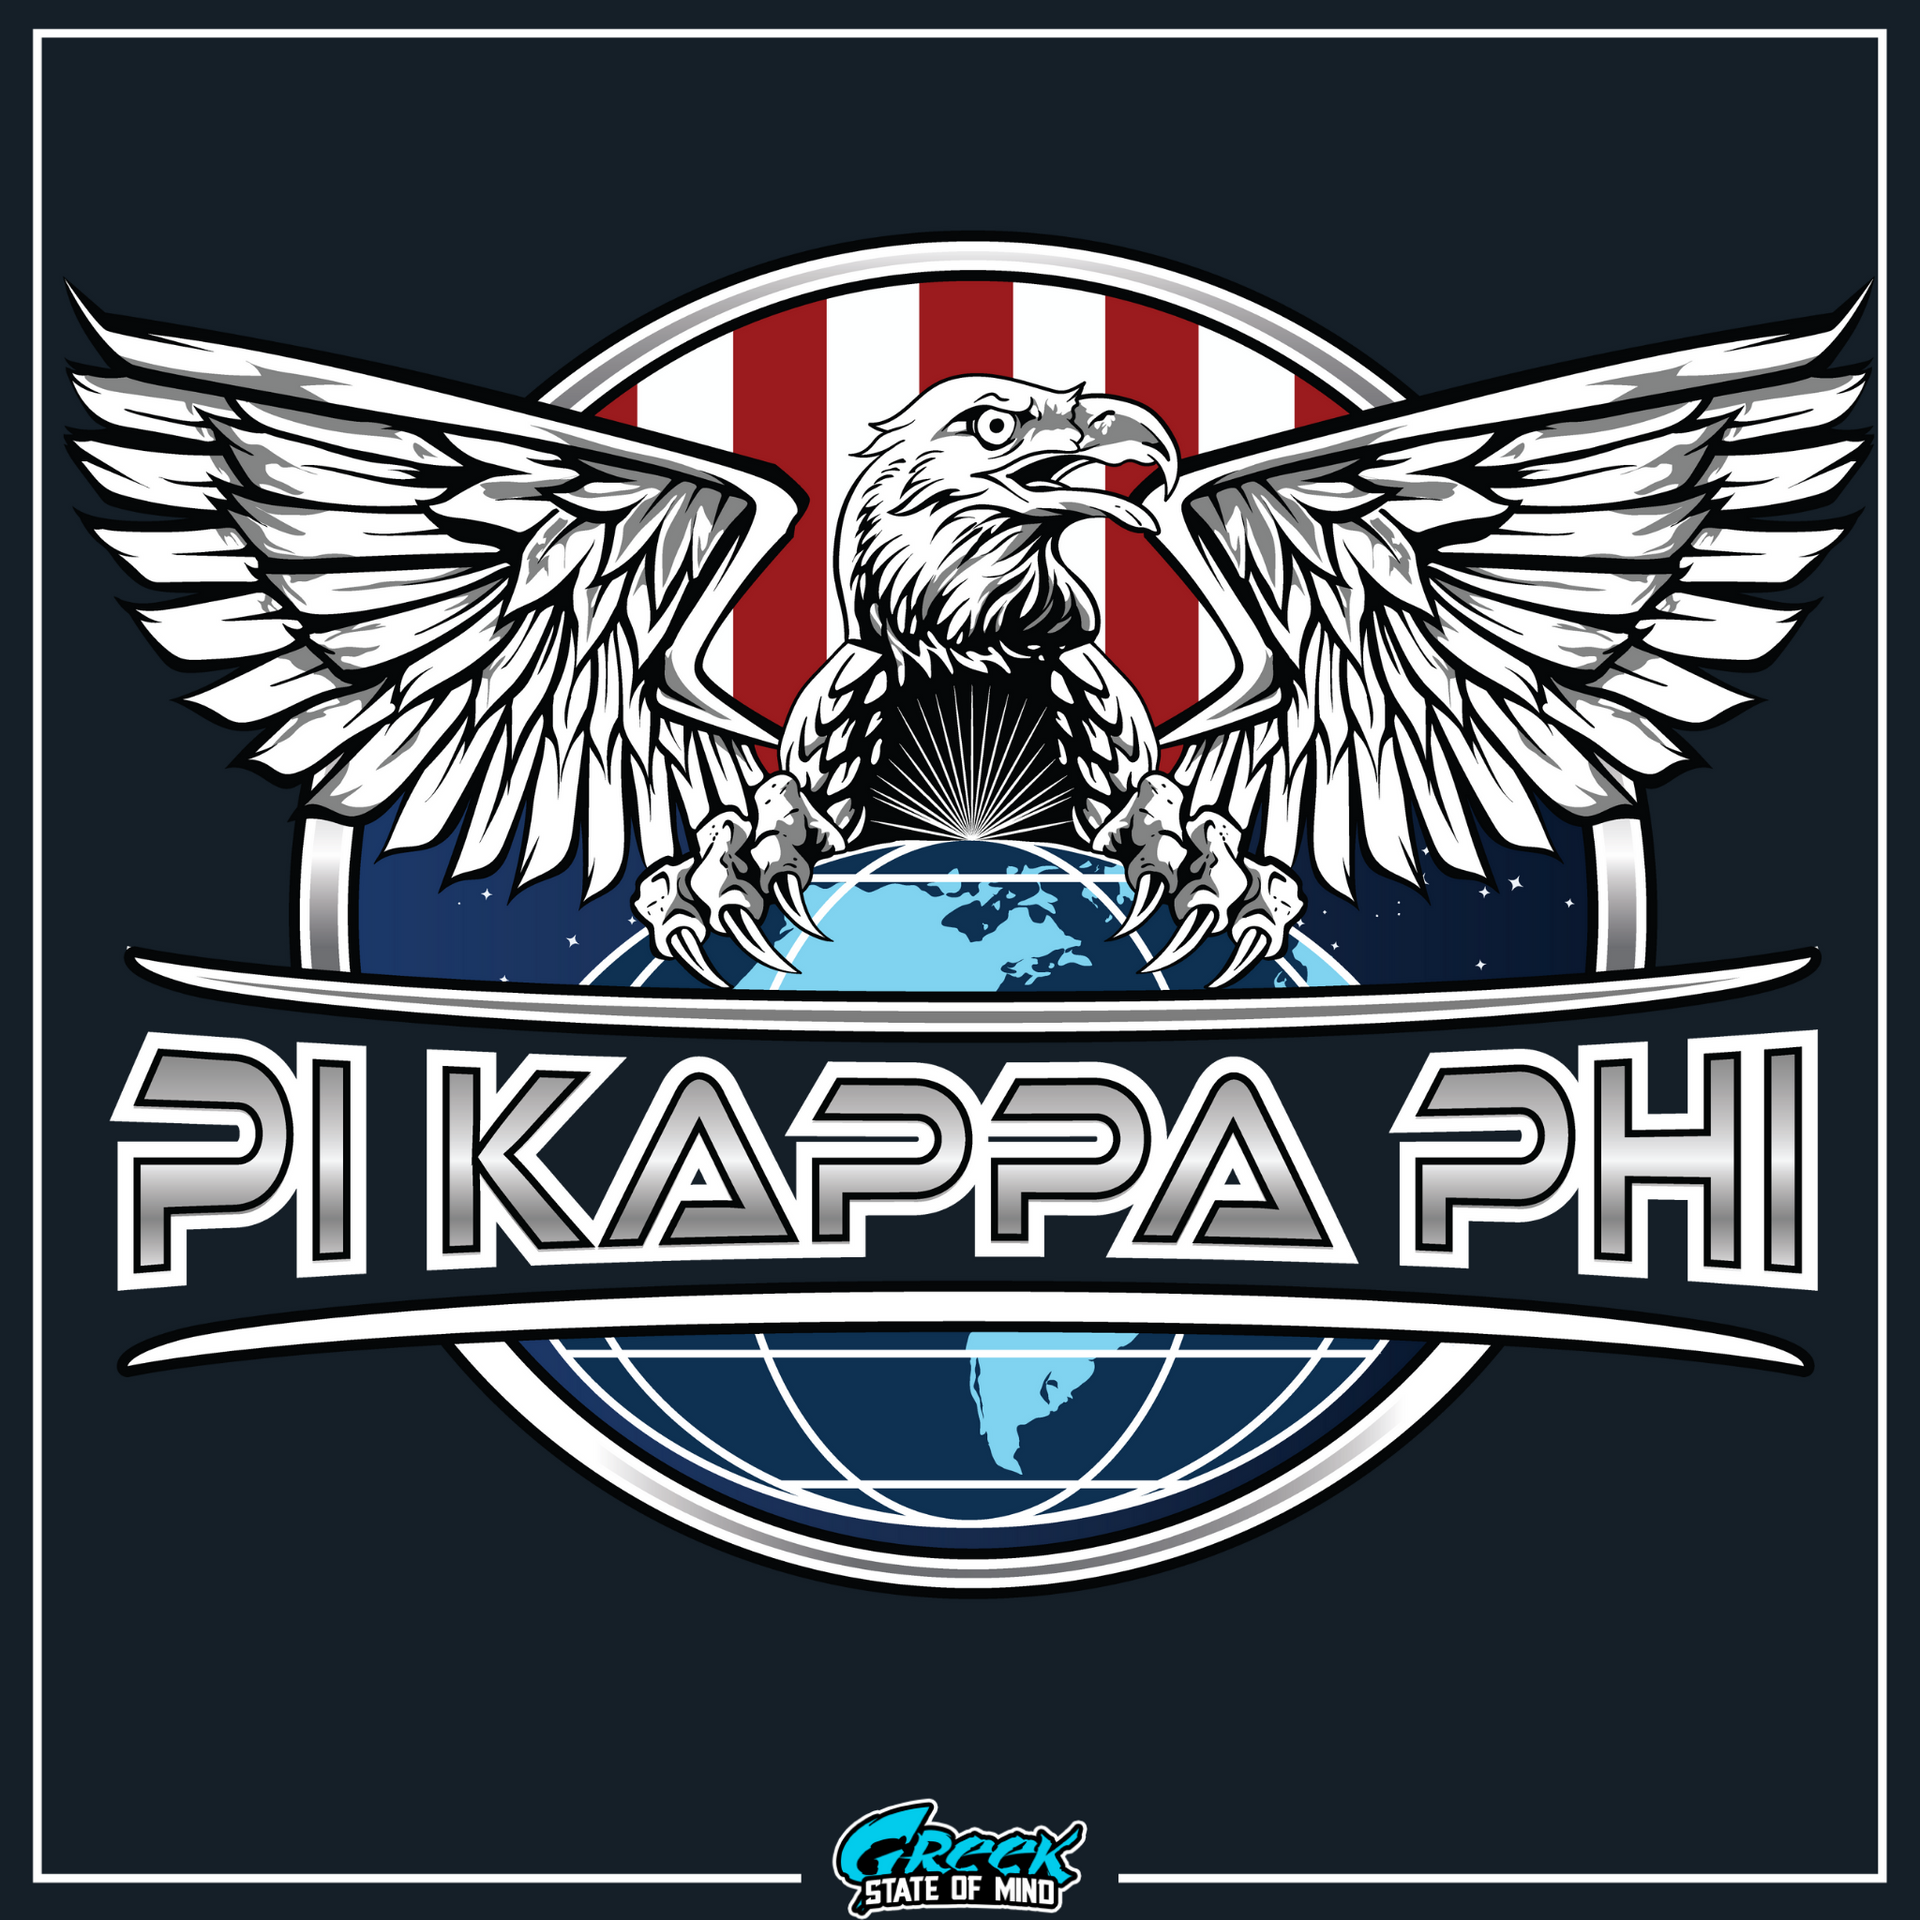 Pi Kappa Phi Apparel and Merchandise design